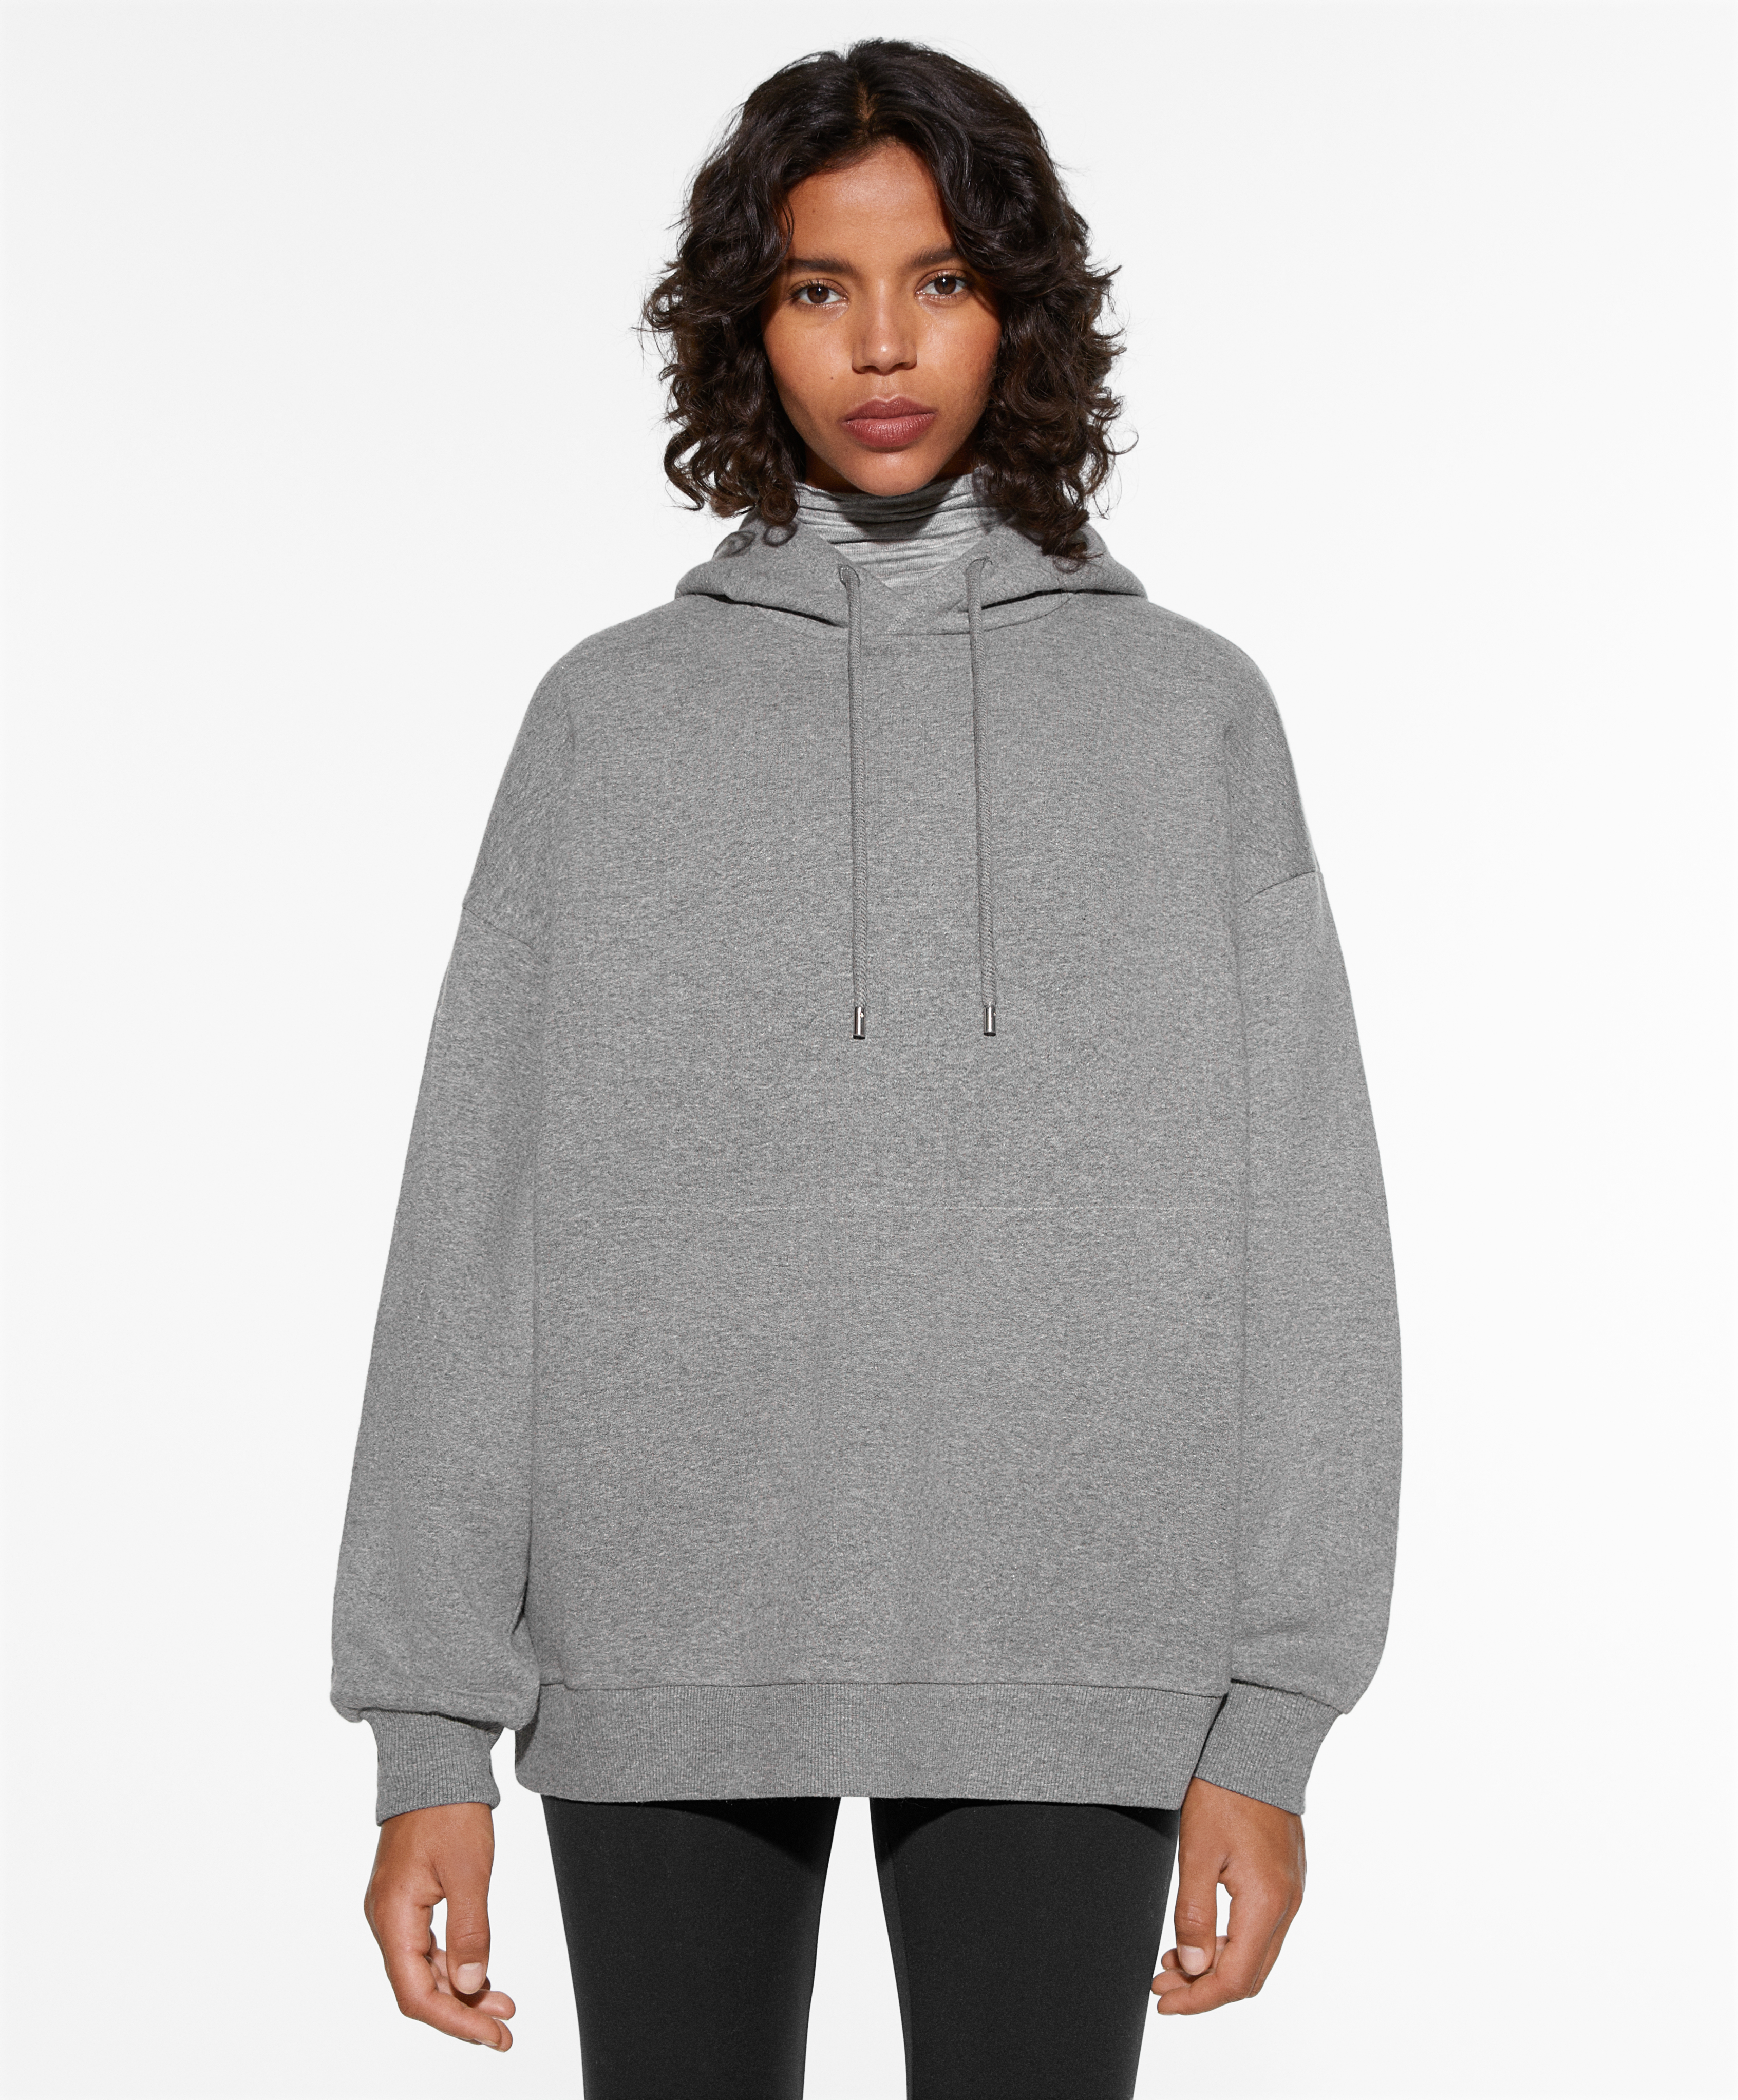 Oversized-Baumwoll-Sweatshirt mit Kapuze